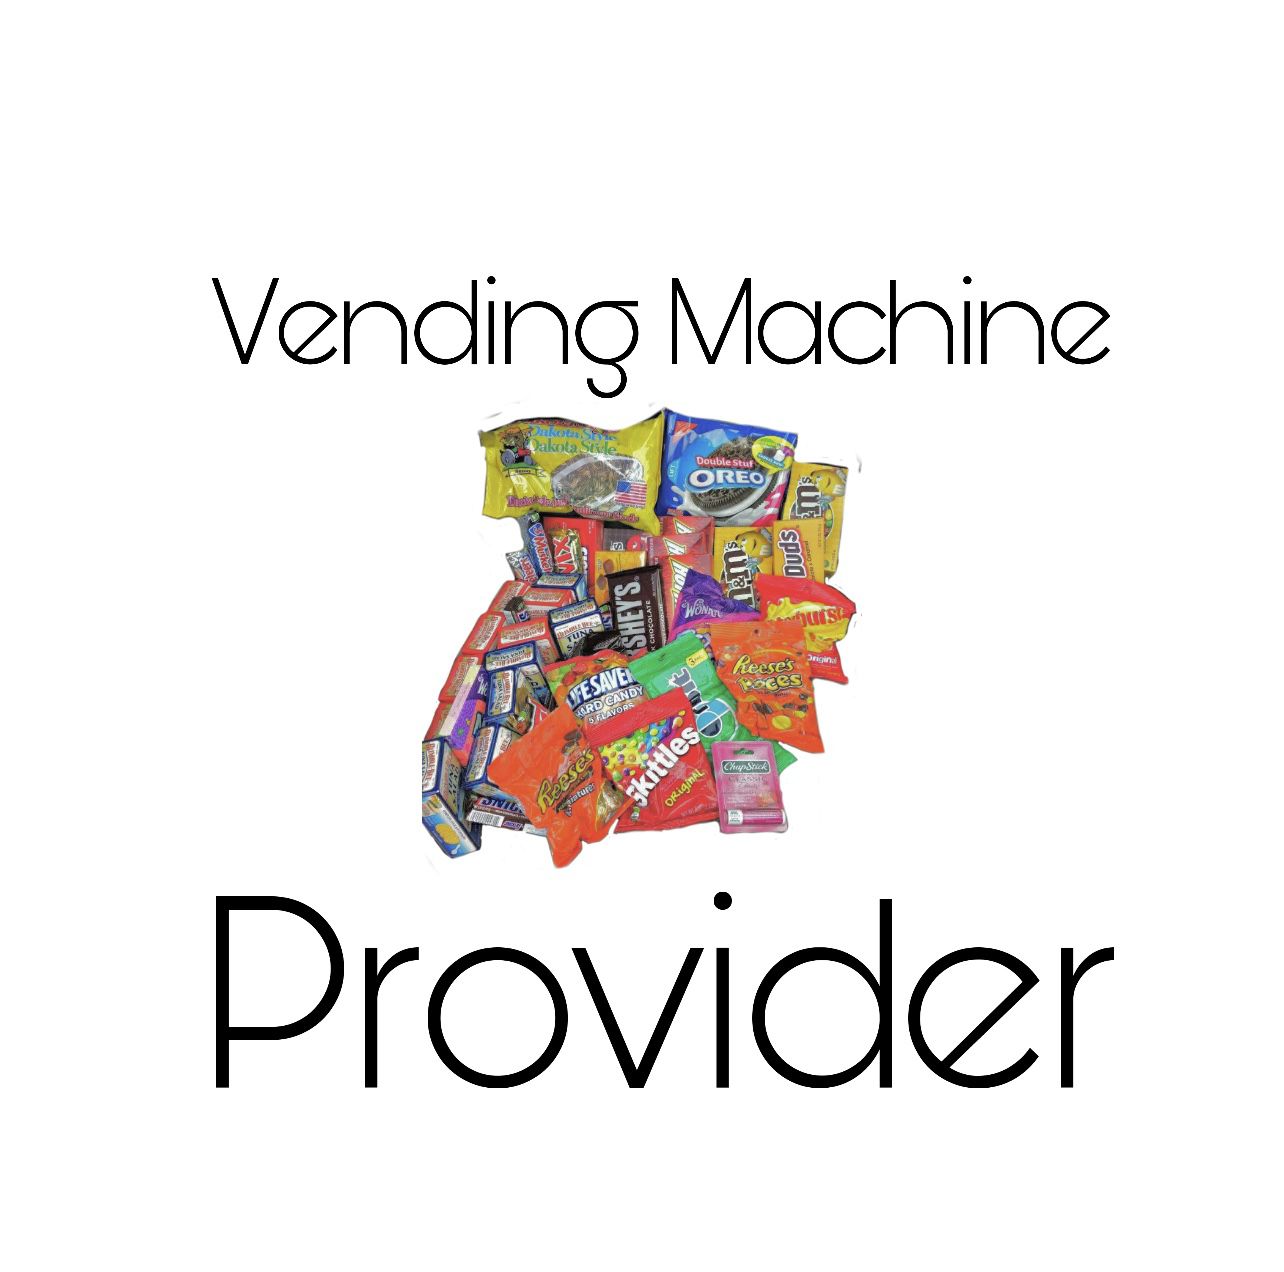 Vending Machine Provider